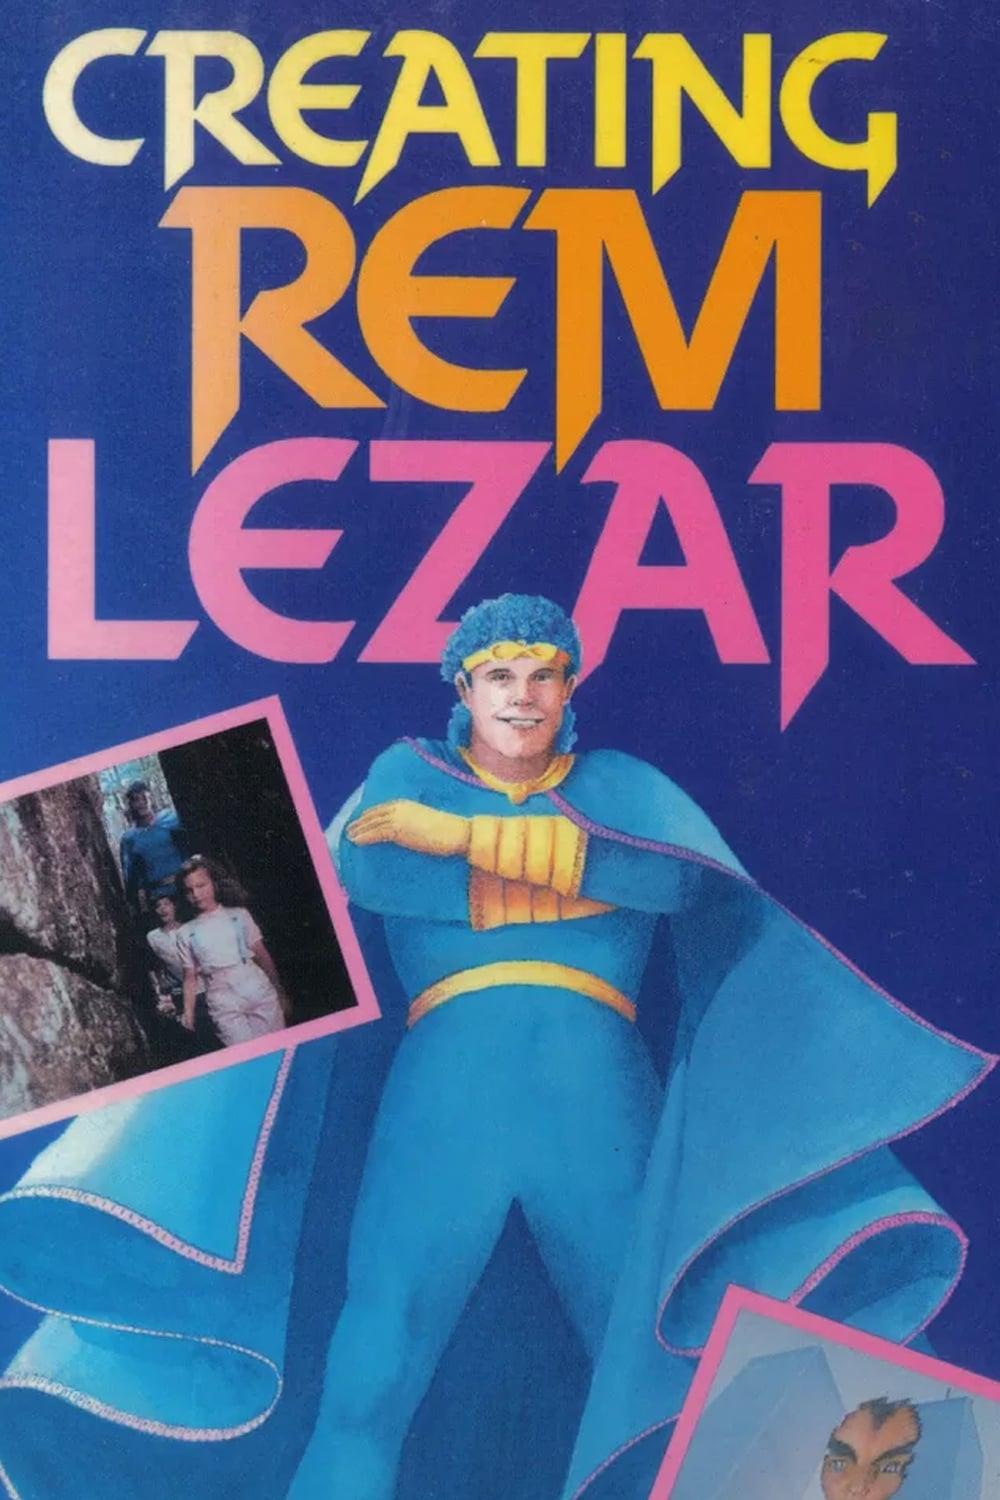 Creating Rem Lezar poster